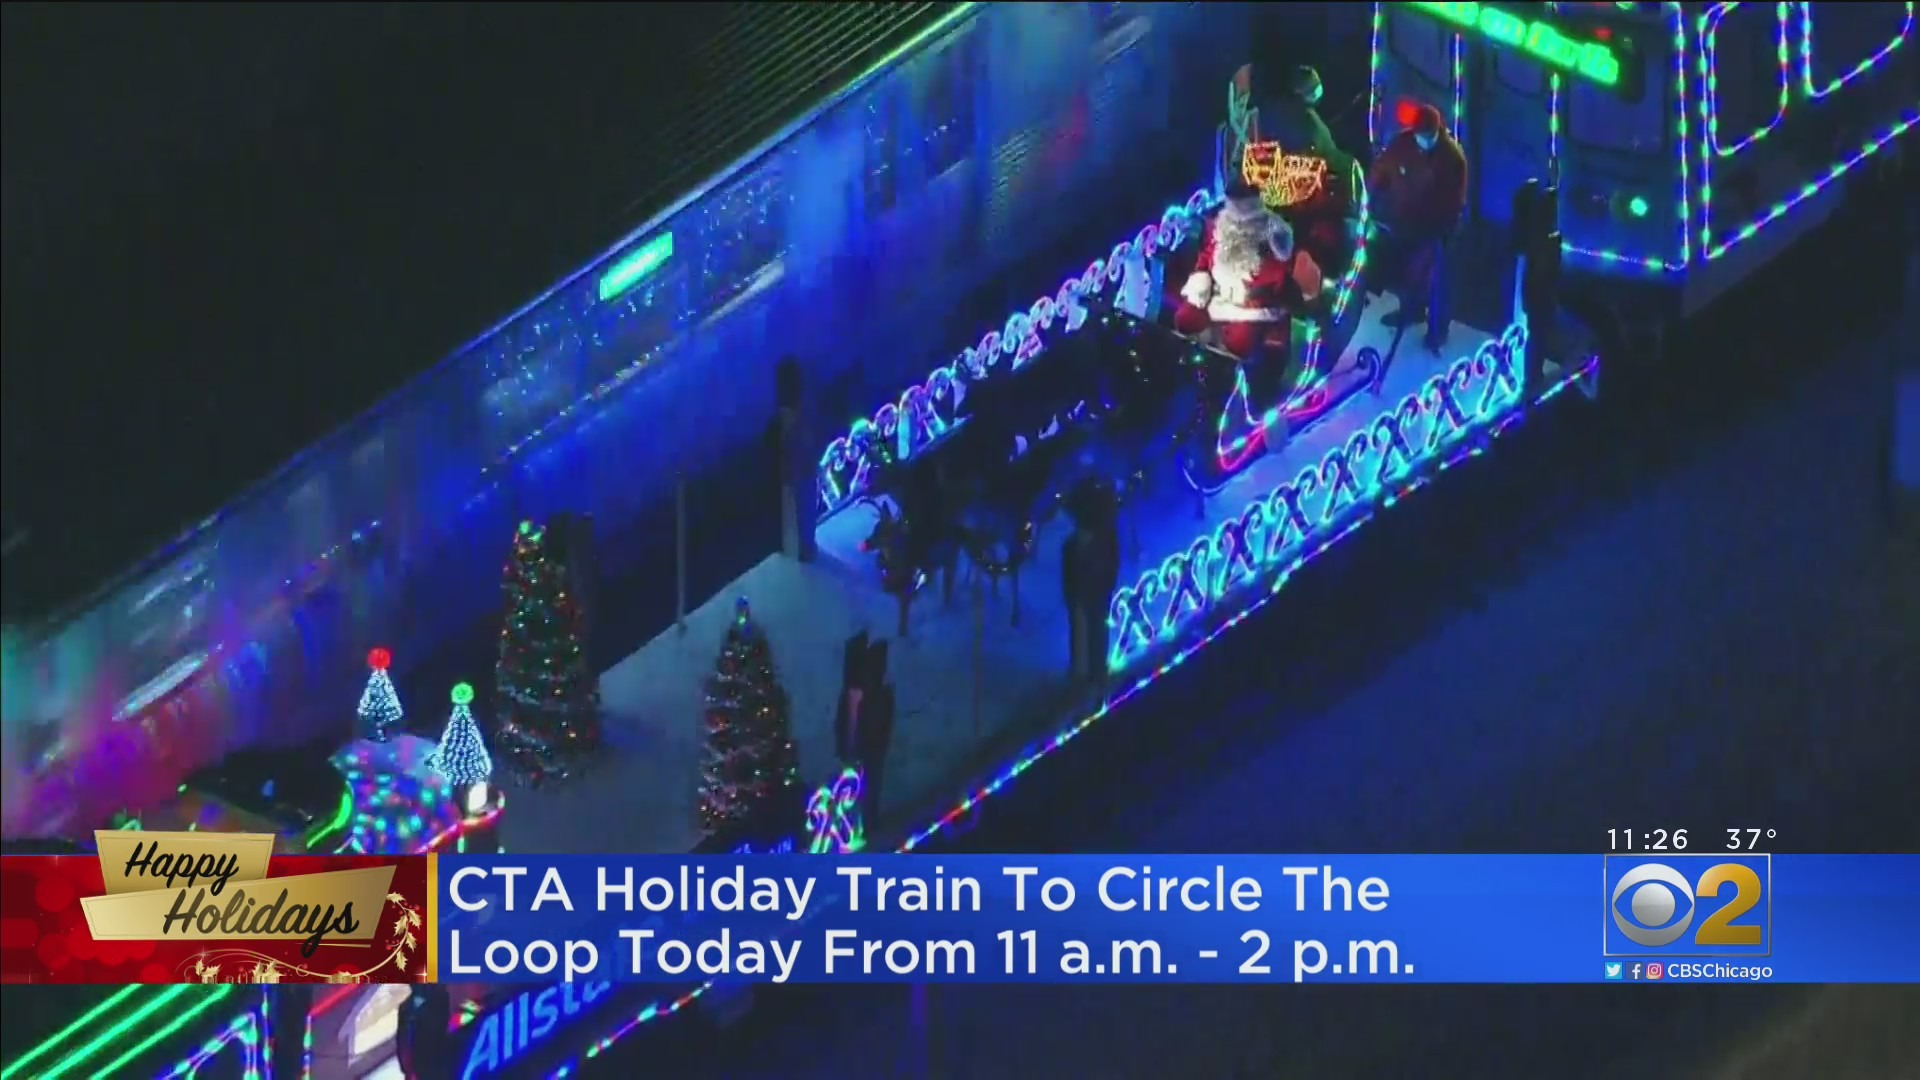 Ride The CTA Holiday Train Through The Loop Monday